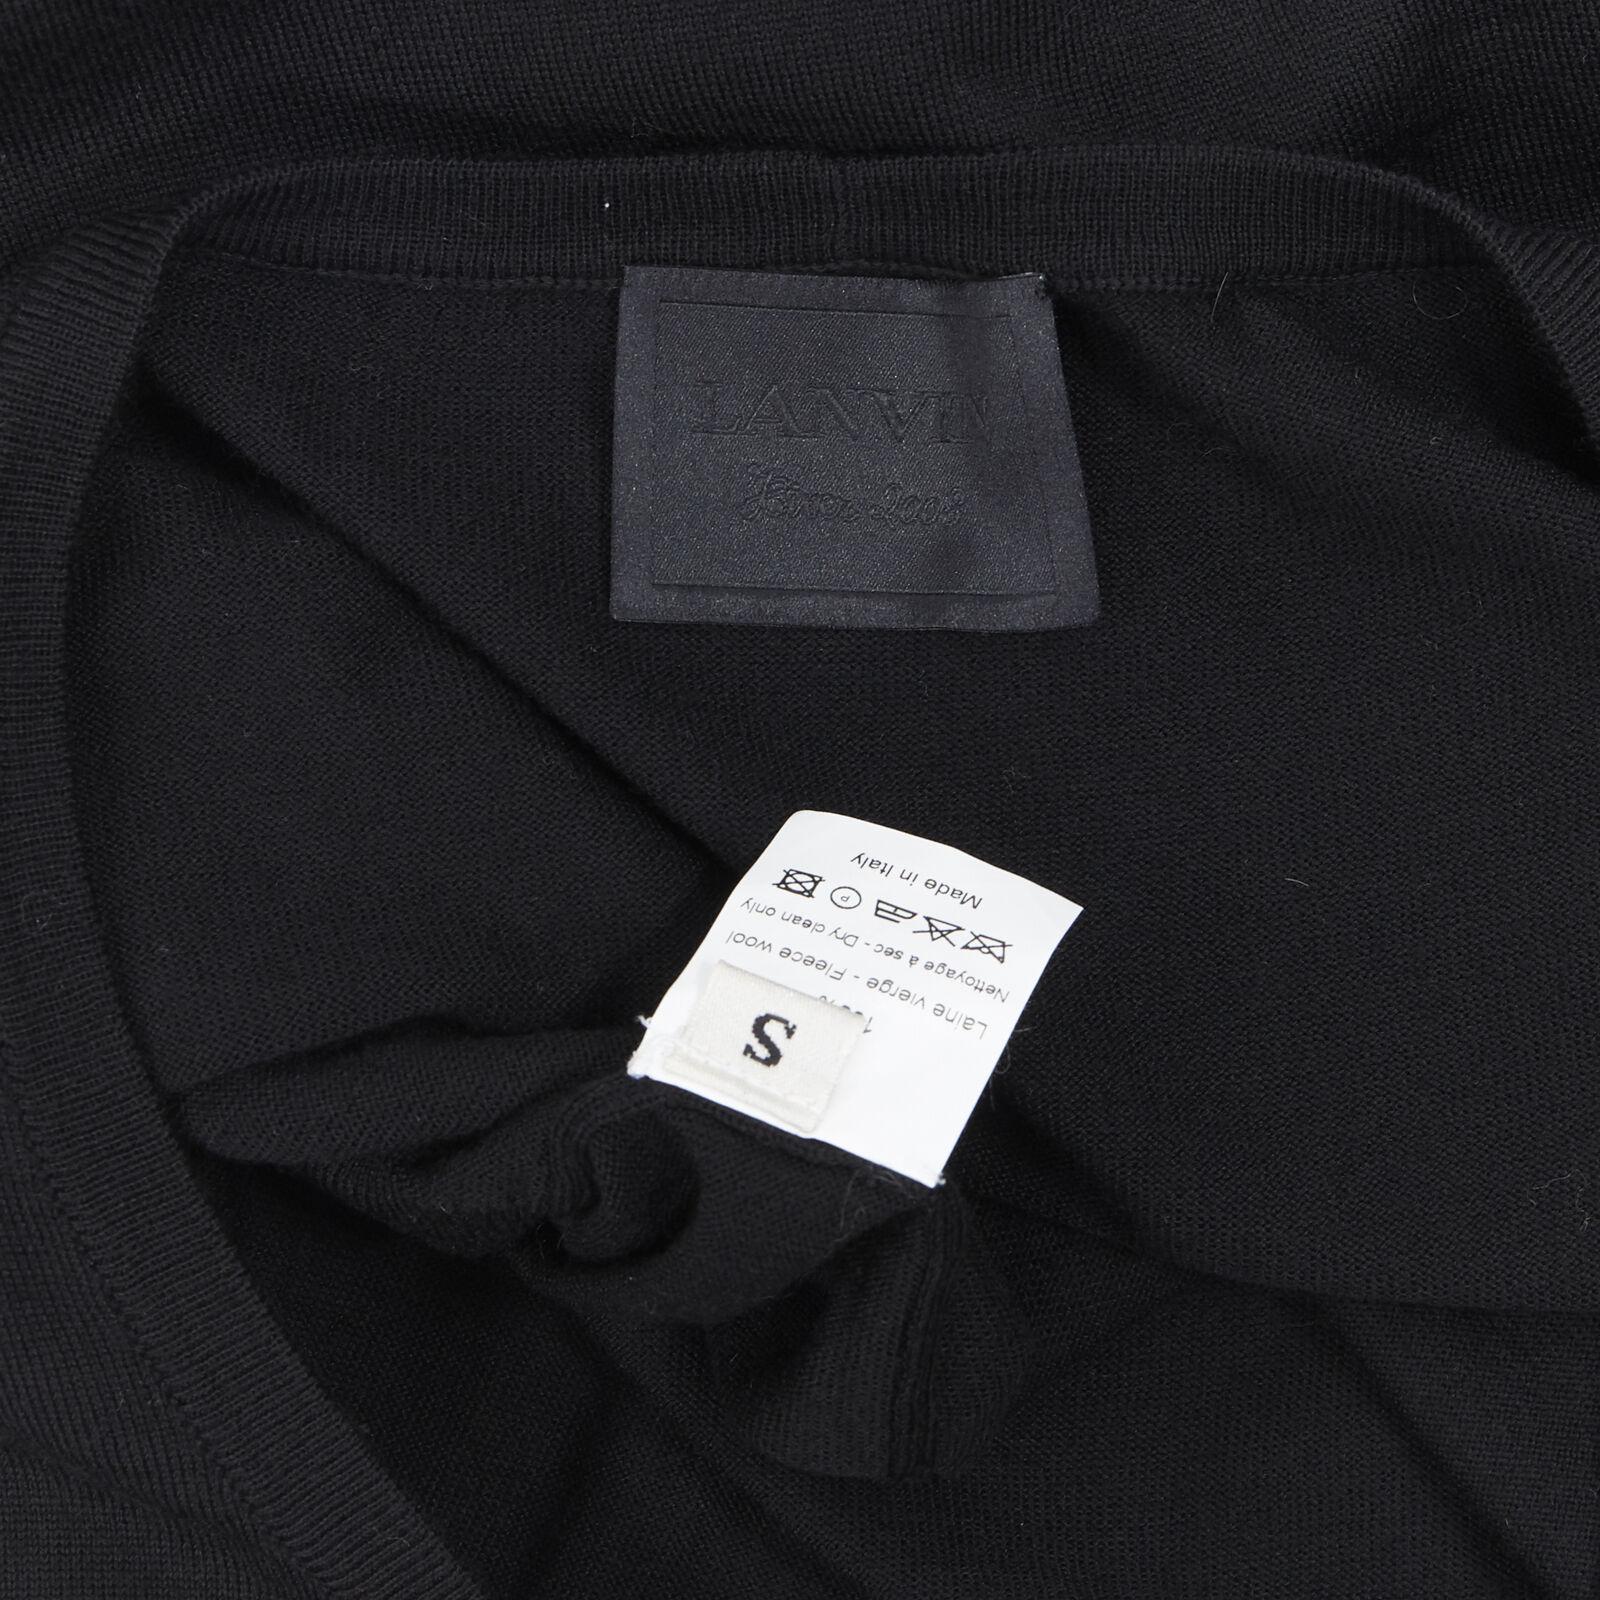 LANVIN Elbaz 2008 100% fleece wool black signature grosgrain ribbon sweater S For Sale 3